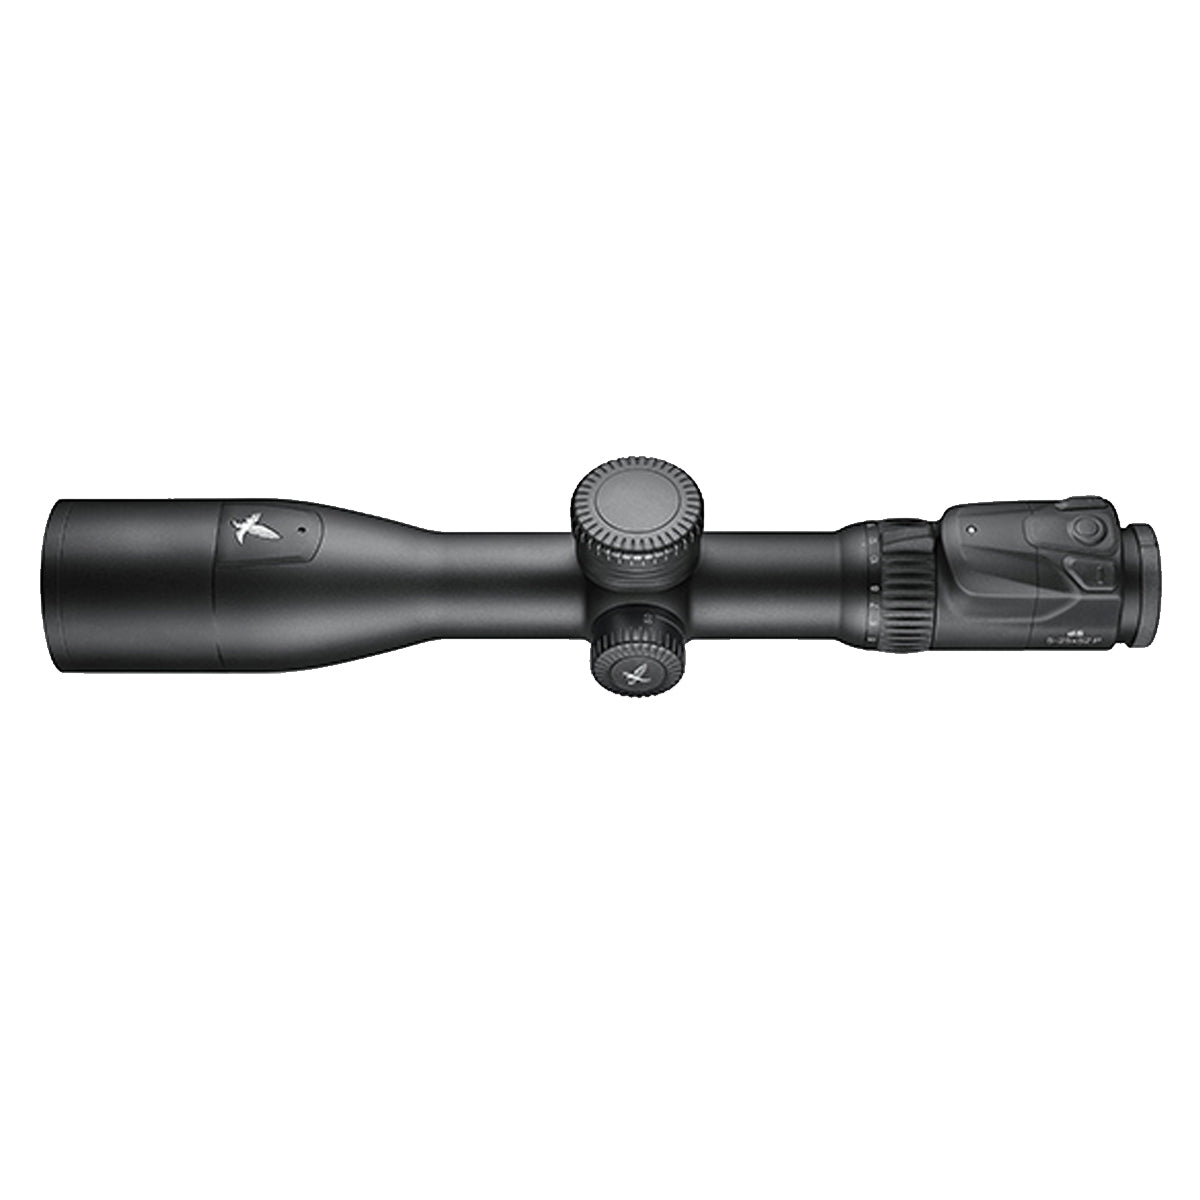 Swarovski dS 5-25x52 Riflescope by Swarovski Optik | Optics - goHUNT Shop